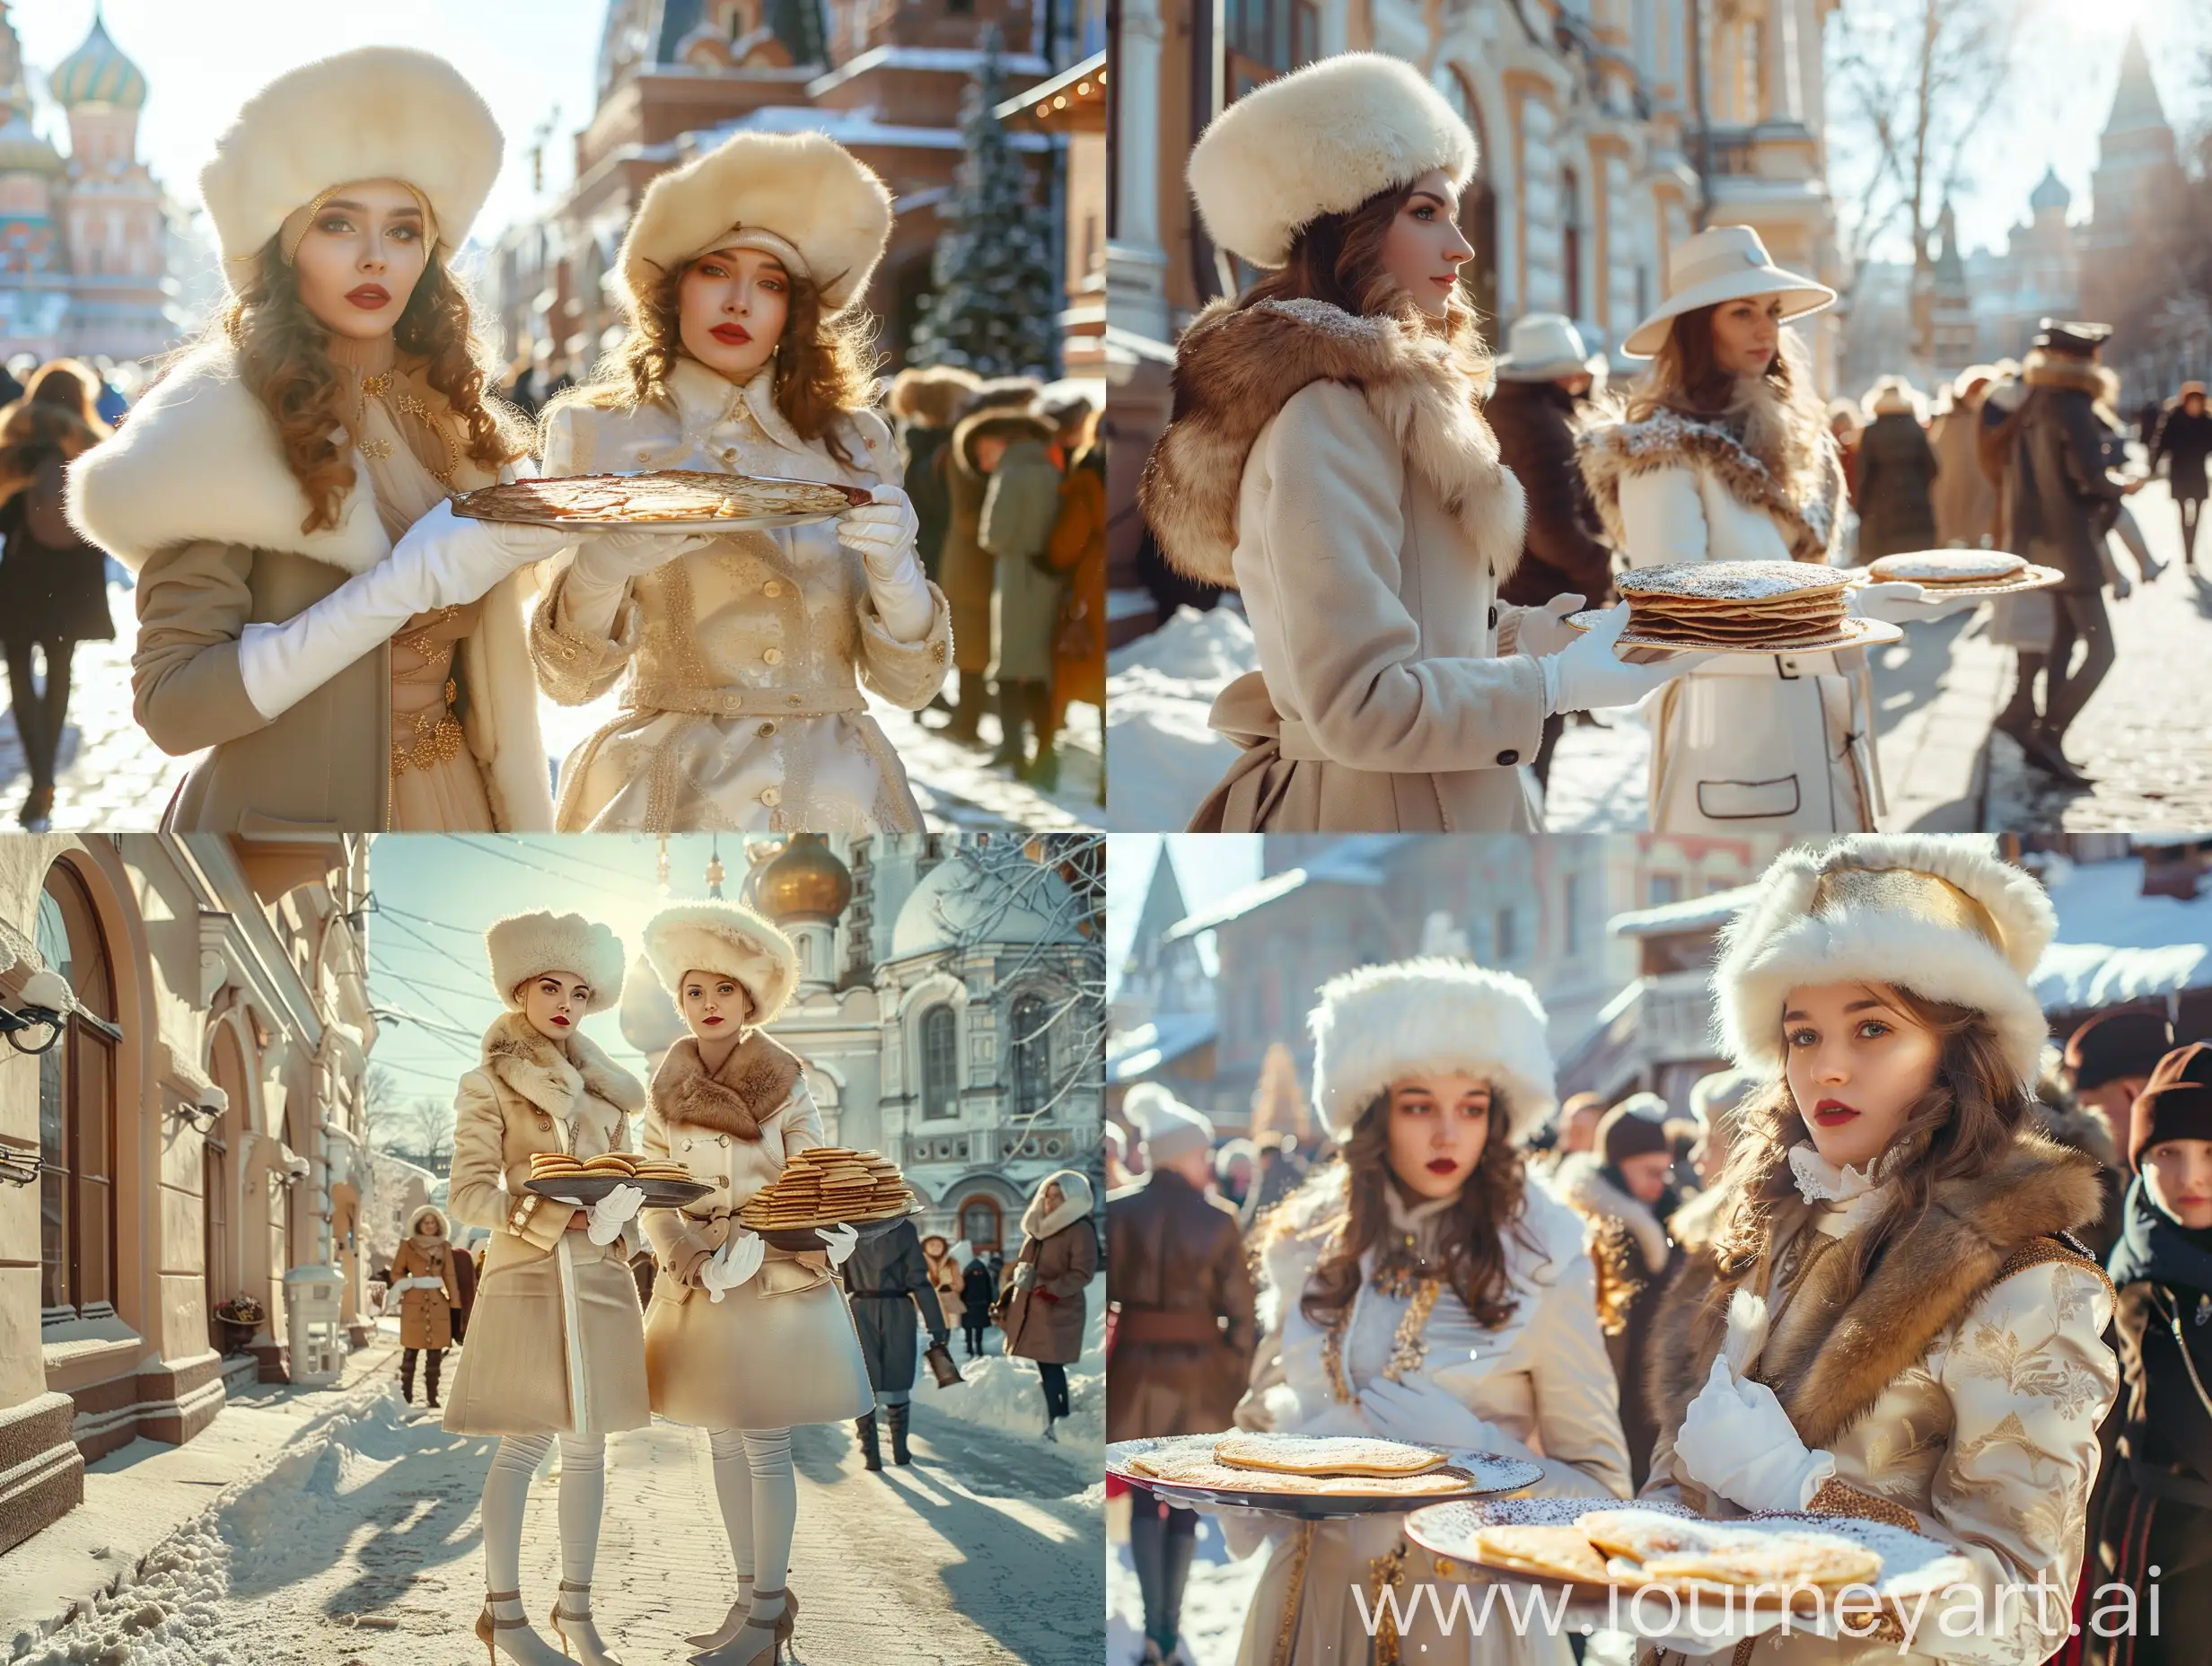 Vibrant-Russian-Maslenitsa-Celebration-with-Glamorous-Girls-and-Pancakes